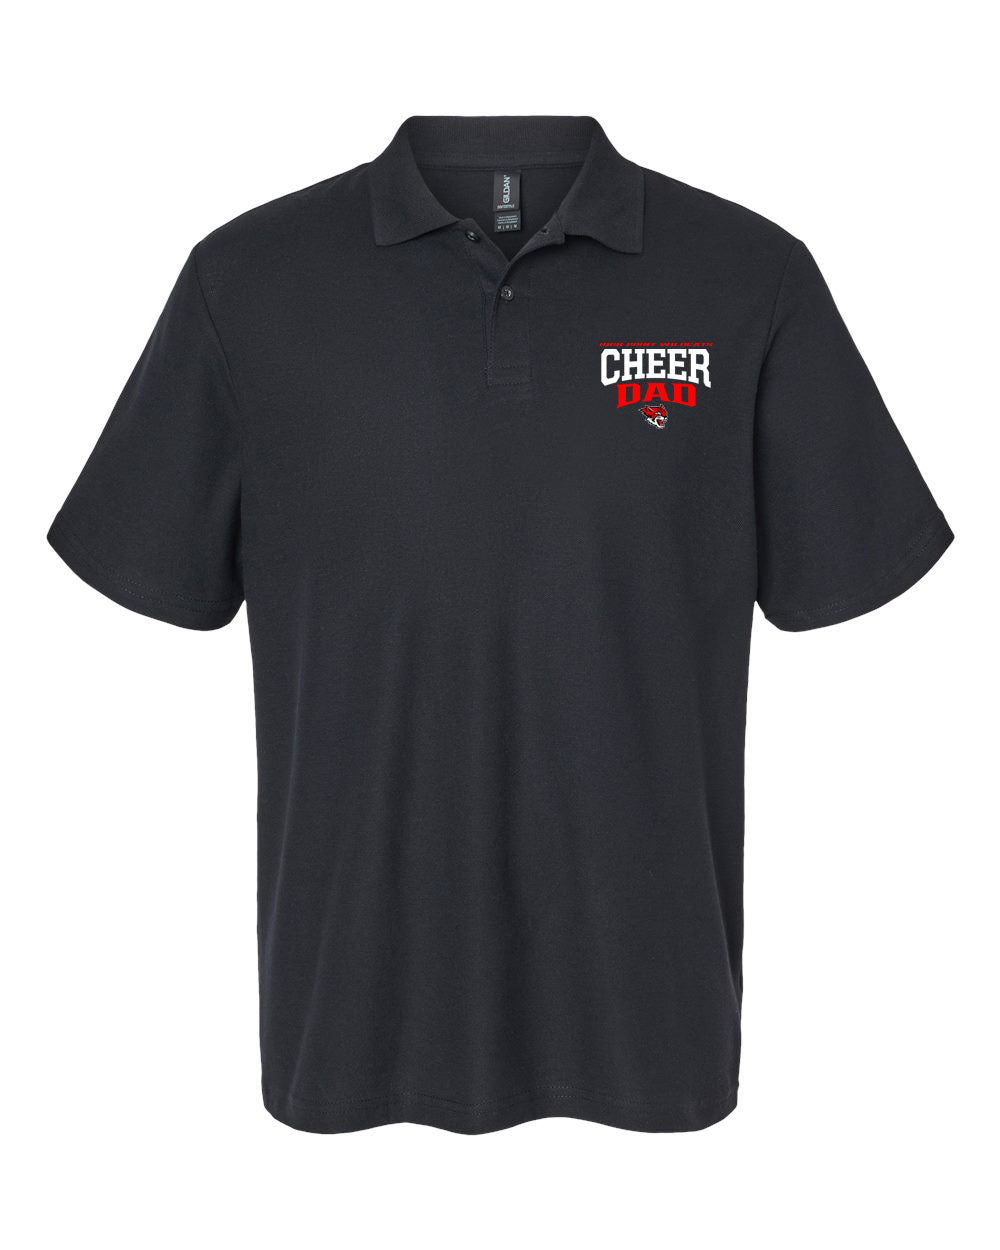 Wildcats Cheer Design 6 Polo T-Shirt